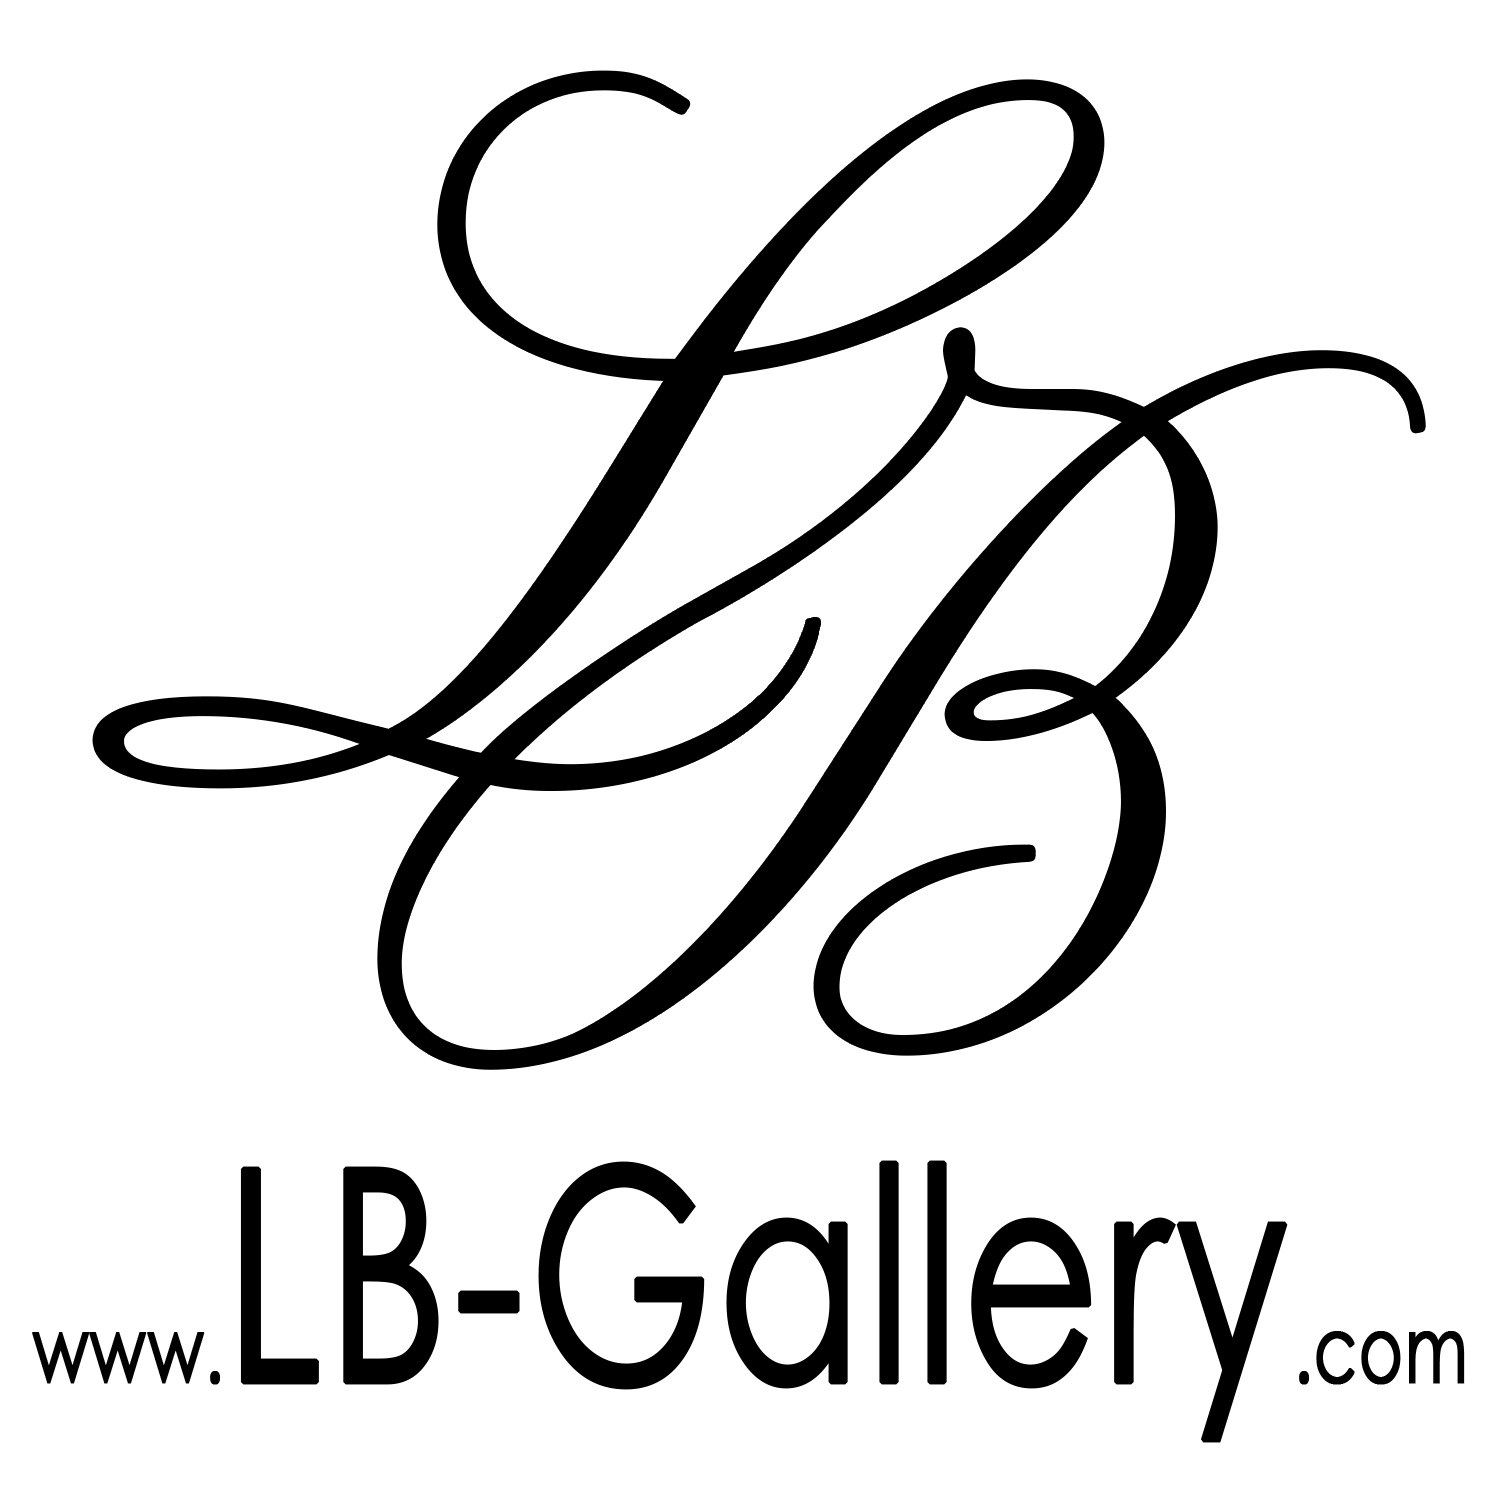 LB Gallery, Inc